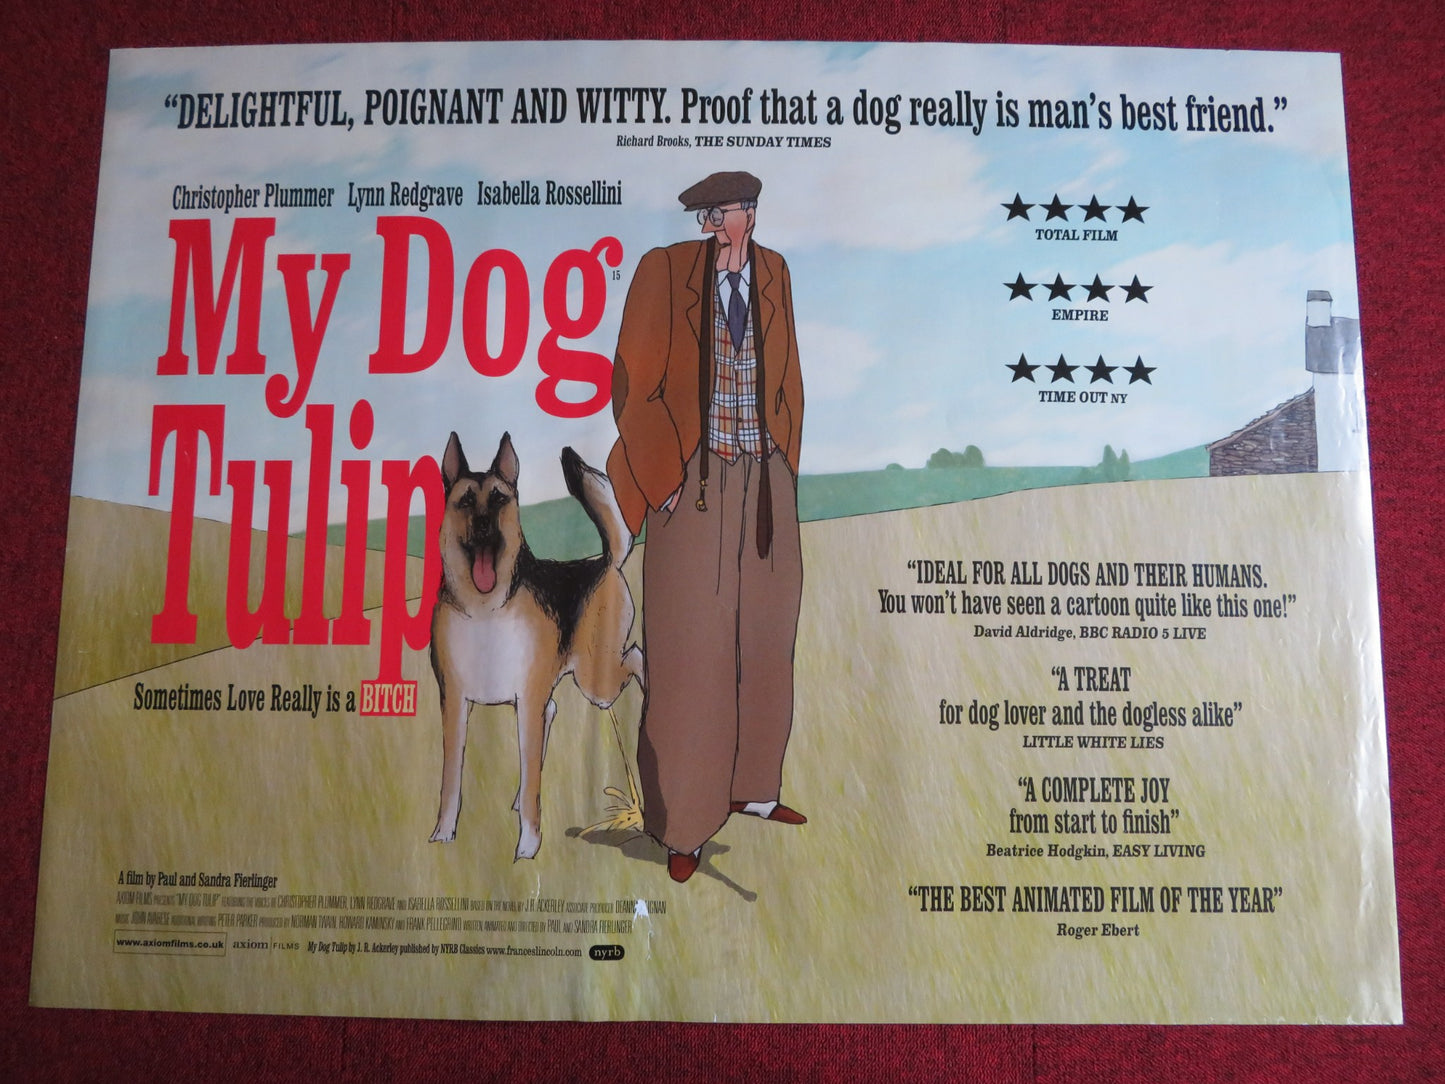 MY DOG TULIP UK QUAD (30"x 40") ROLLED POSTER C. PLUMMER LYNN REDGRAVE 2009